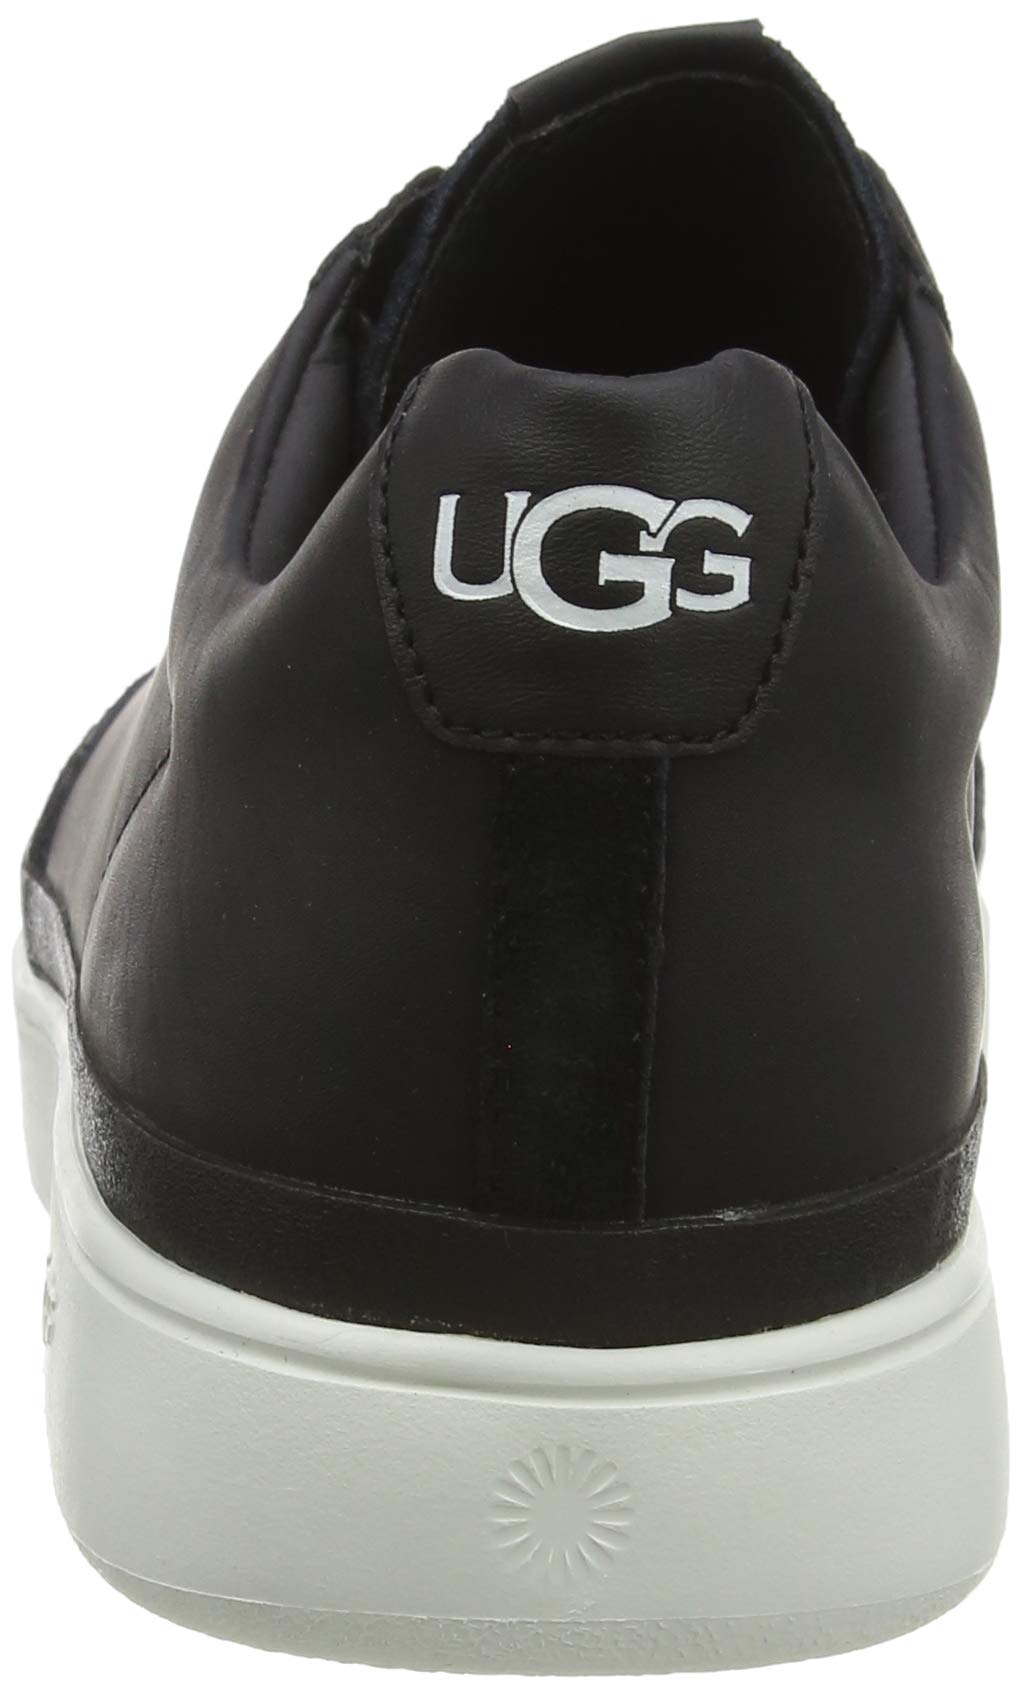 UGG Men's South Bay Sneaker Low